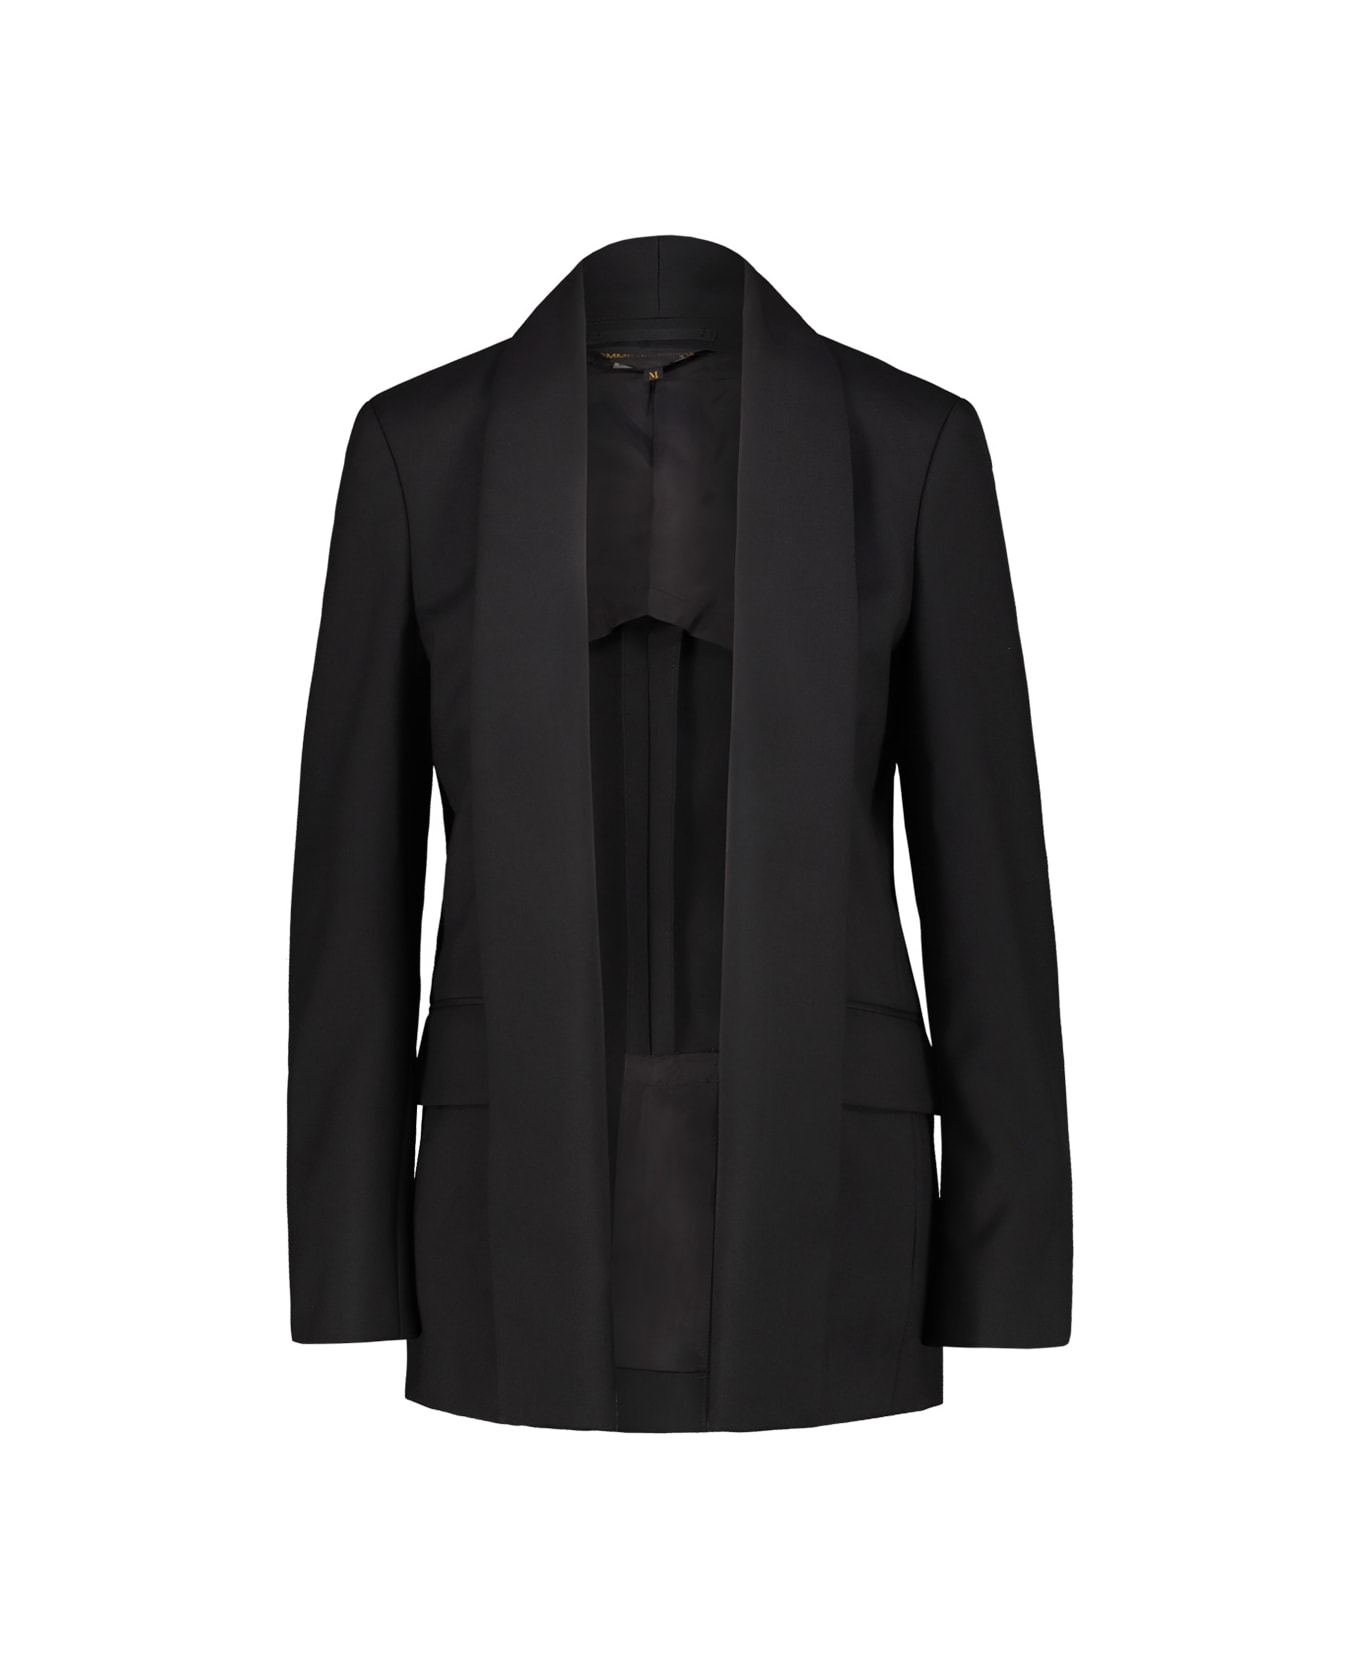 Comme des Garçons Jacket With Shawl Collar - Black ジャケット